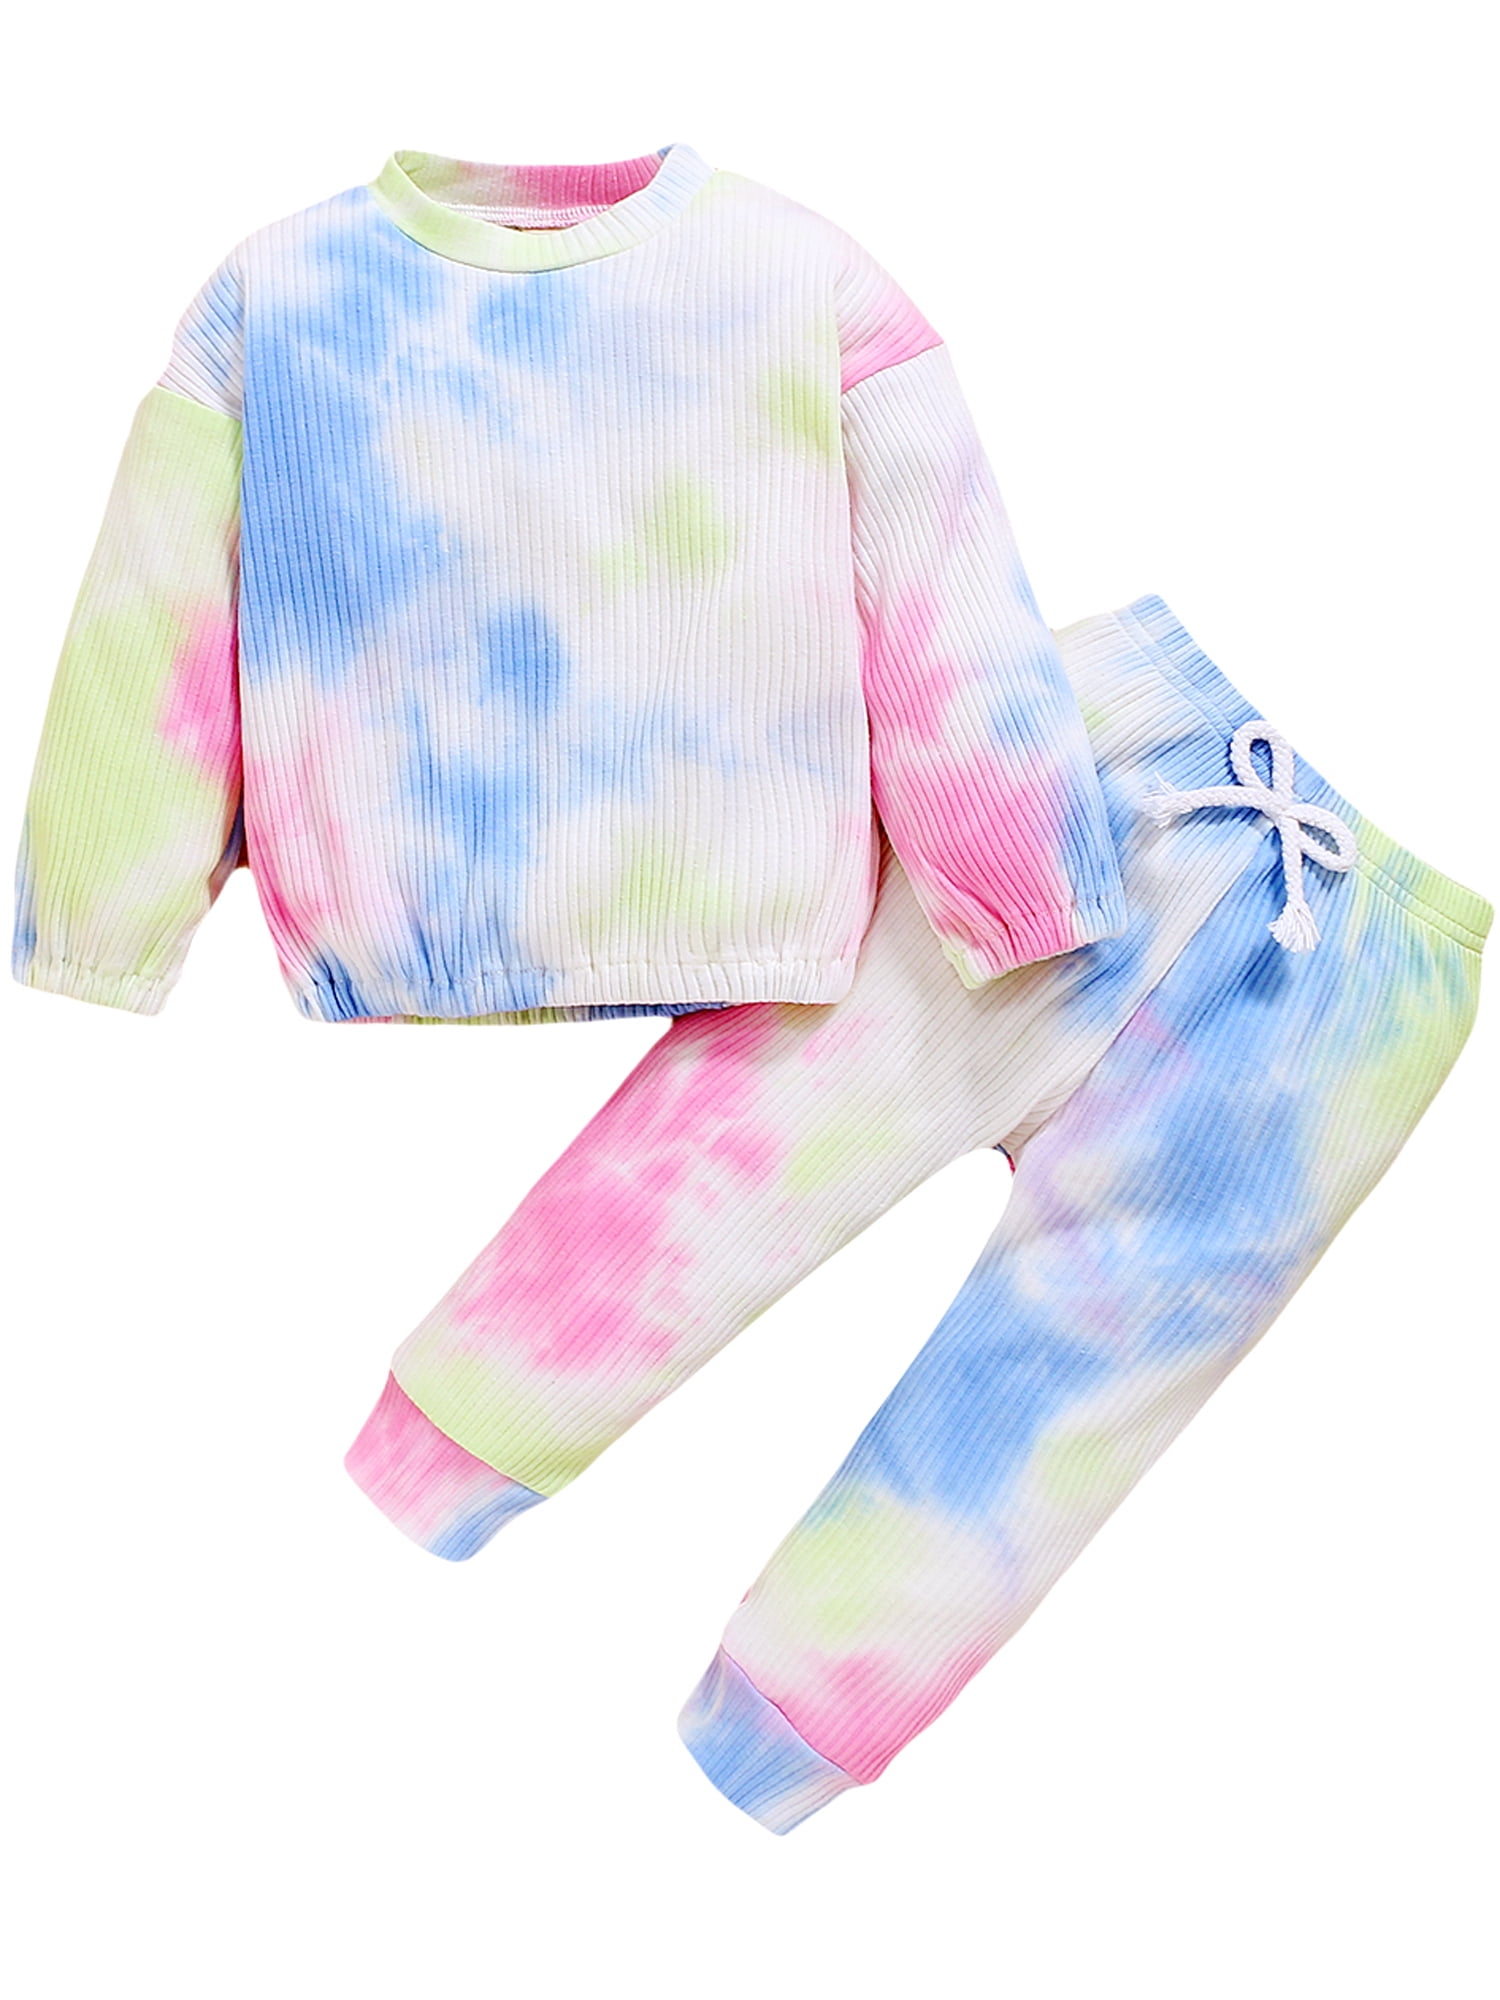 Abendedian Toddler Baby Girl Boy 2Pcs Outfit Tie-Dye Print Tops Long Pant Suit Kids Long Sleeve Crewneck Pajamas Sets 12M-5T